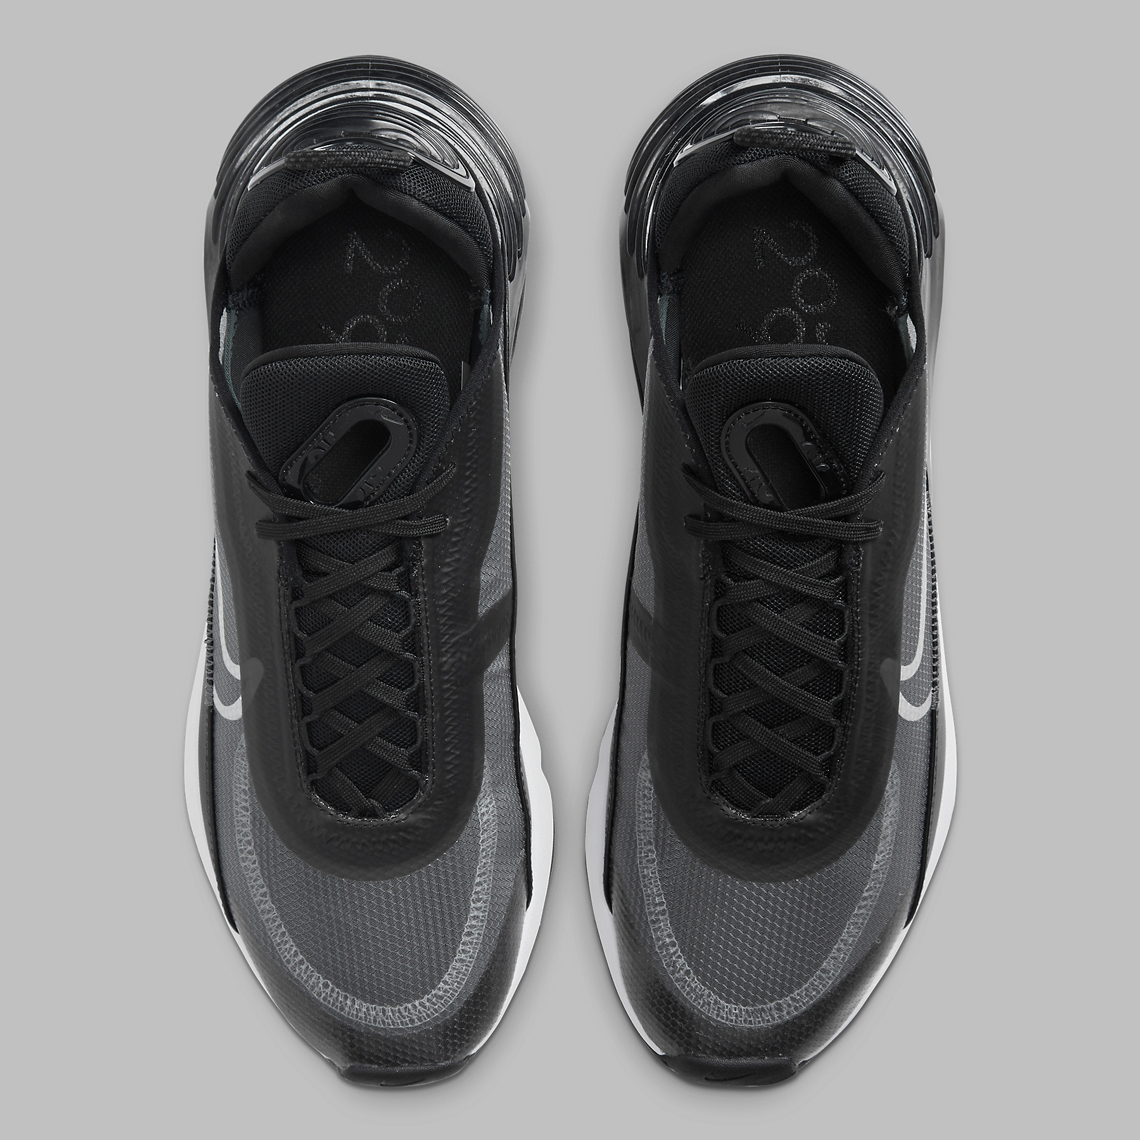 Nike KD 15 Brooklyn Nets Black Royal Tint DM1054-101 For Sale Cw7306 001 5